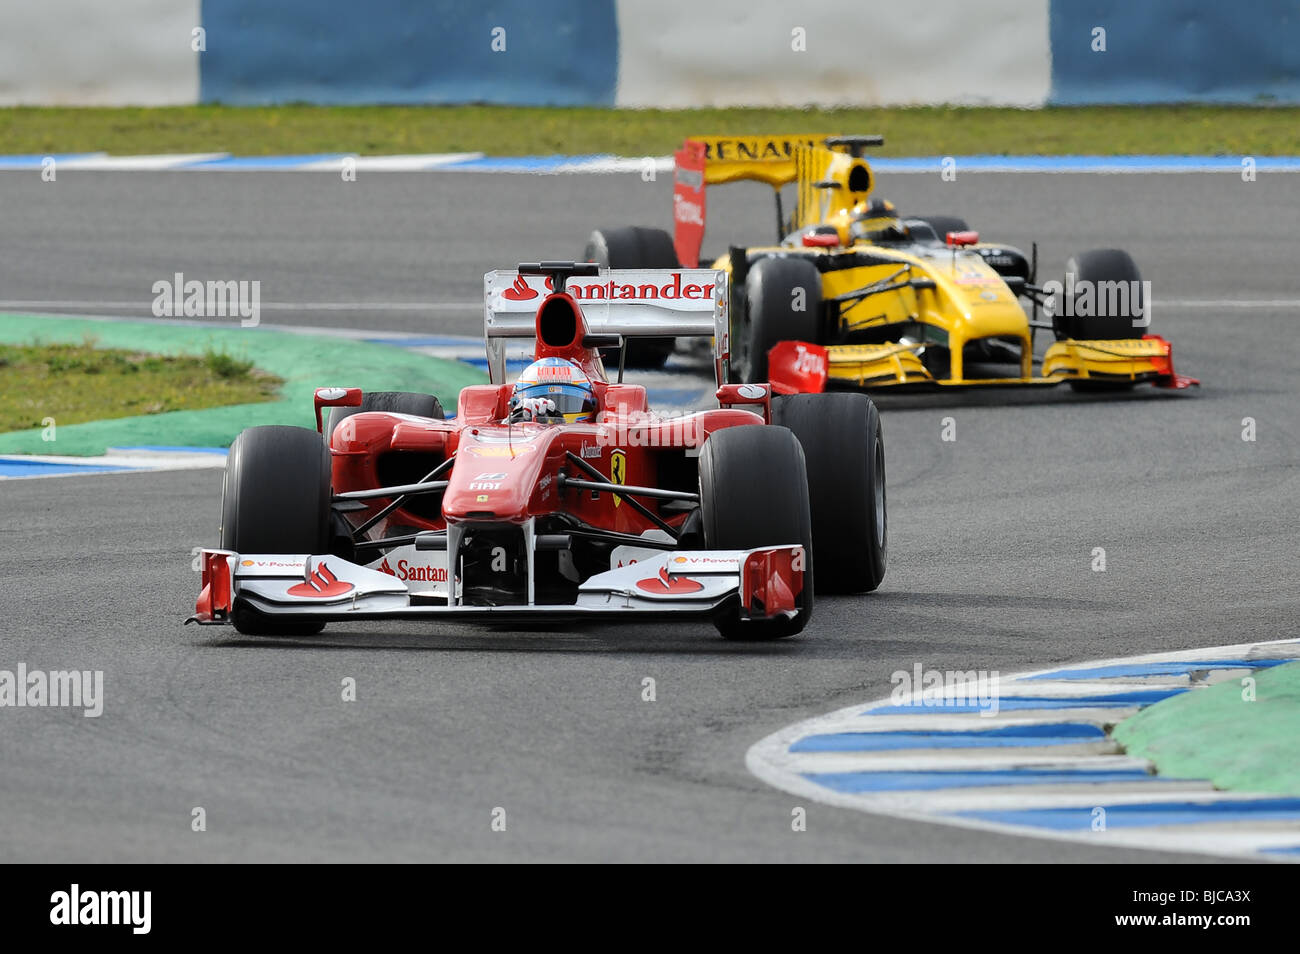 F1 di formula 1 ferrari Renault fernando alonso Foto Stock